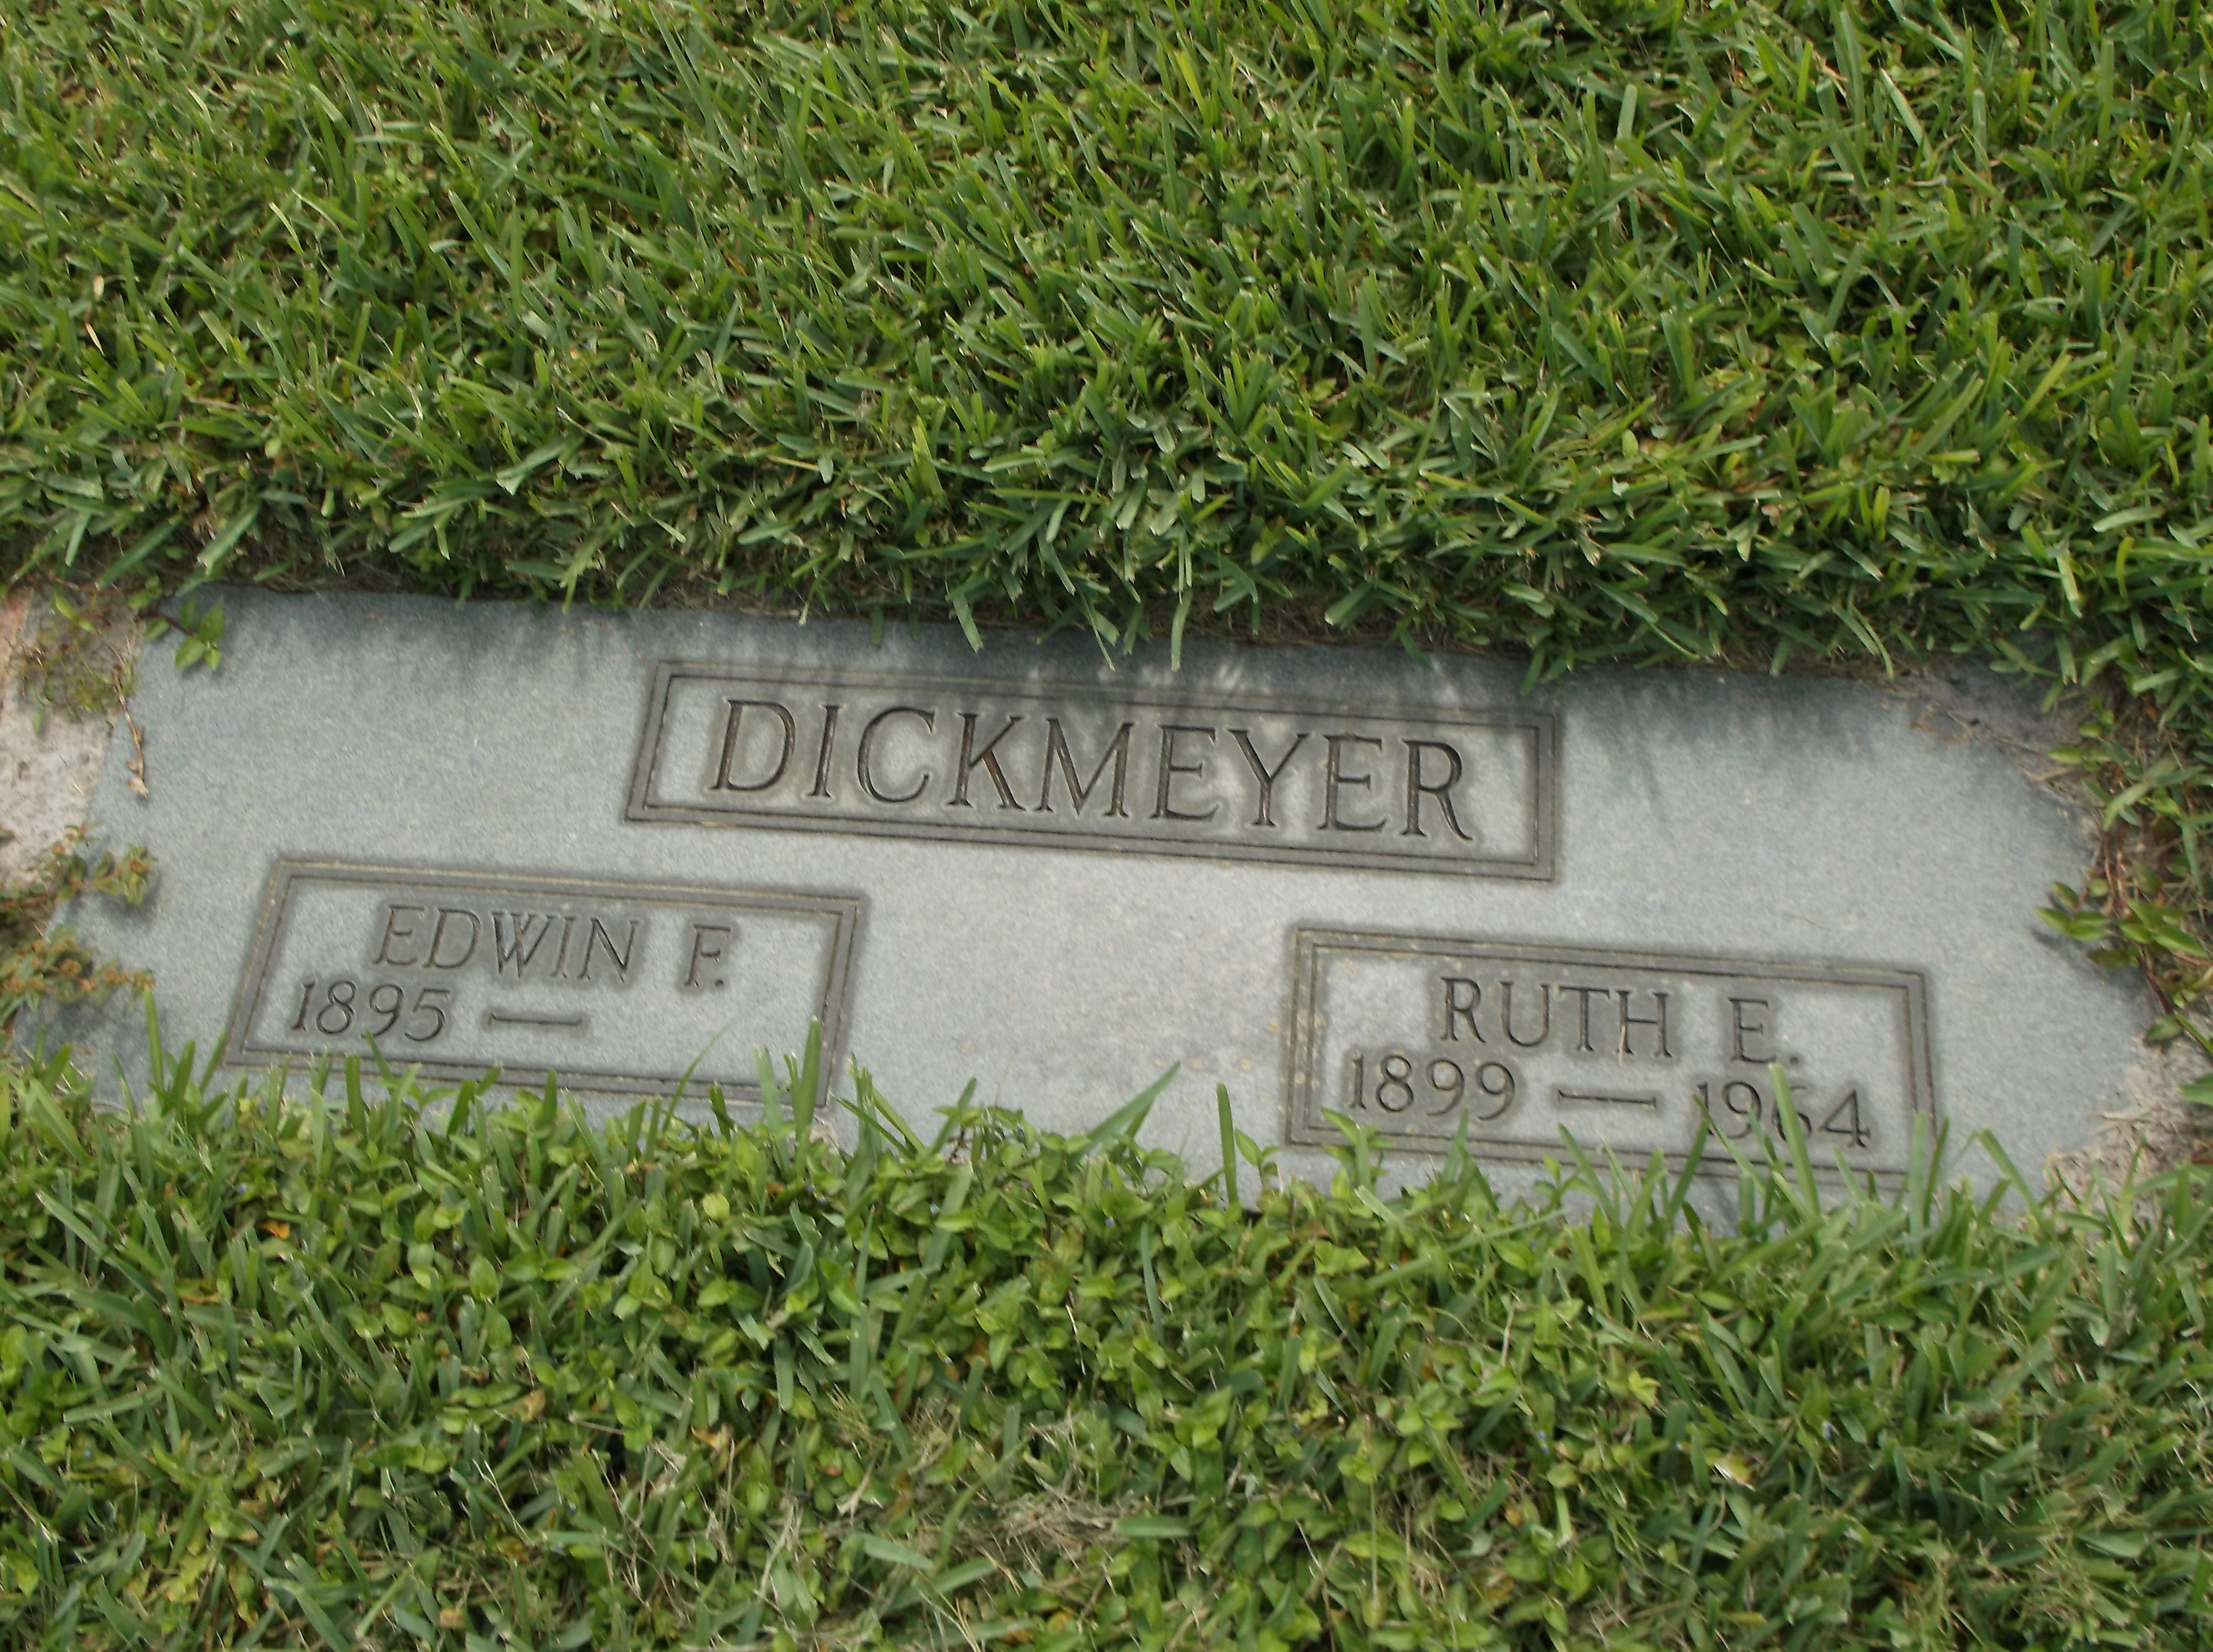 Edwin F Dickmeyer